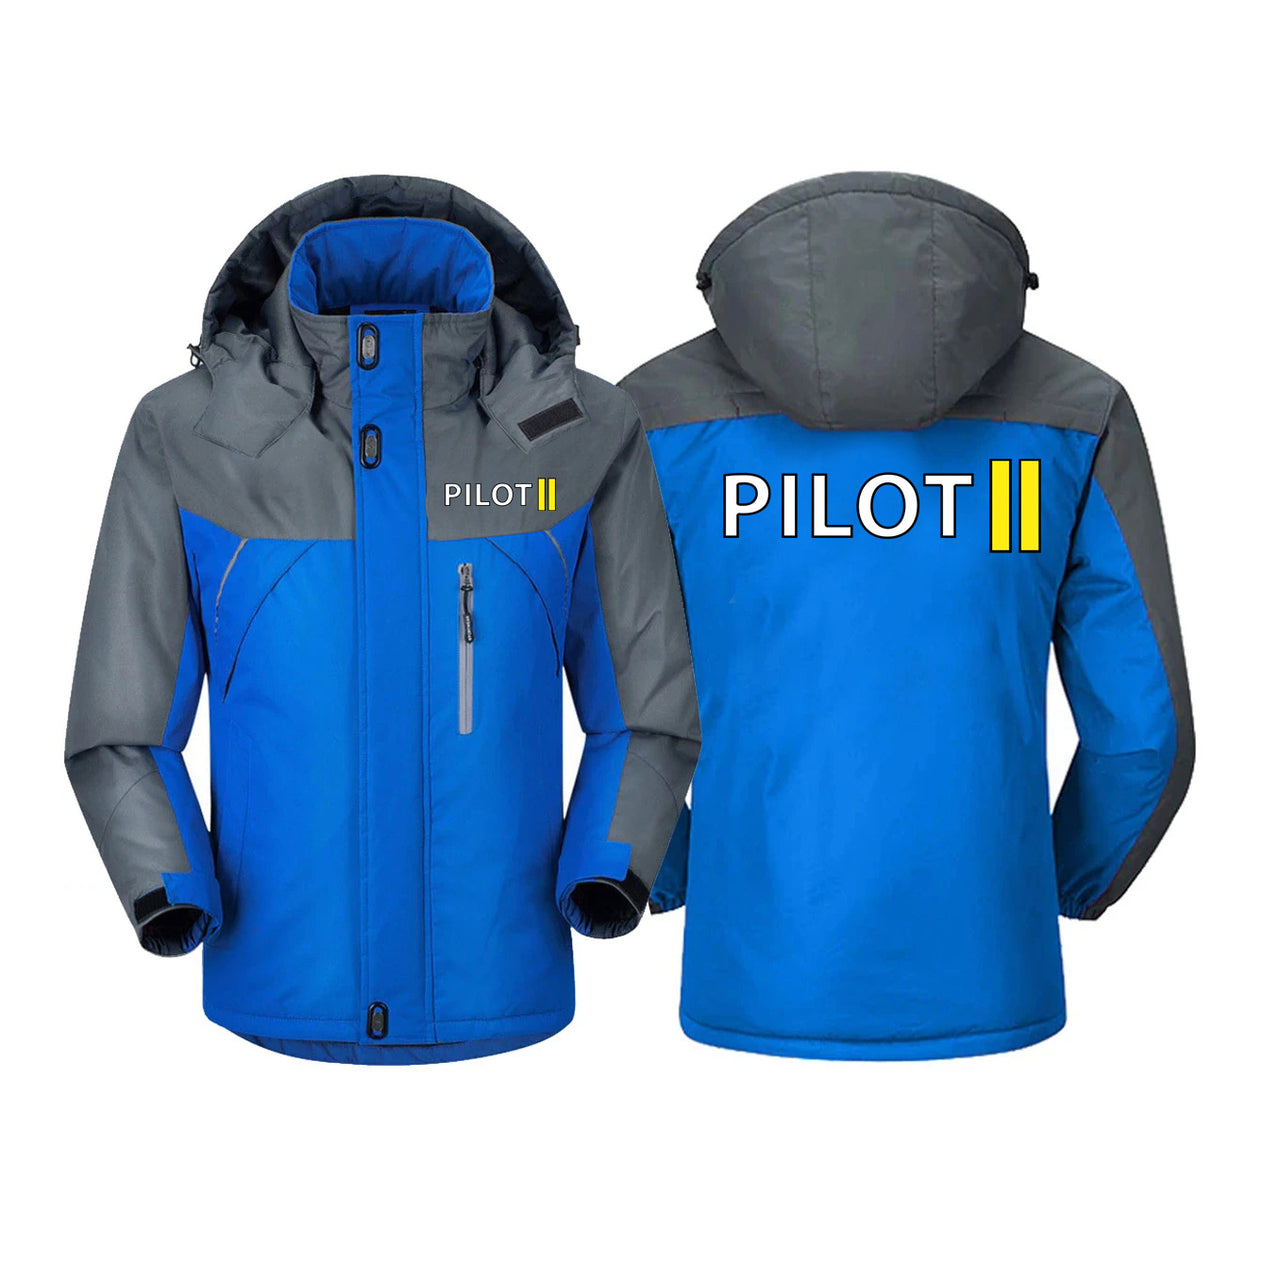 Pilot & Stripes (2 Lines) Designed Thick Winter Jackets